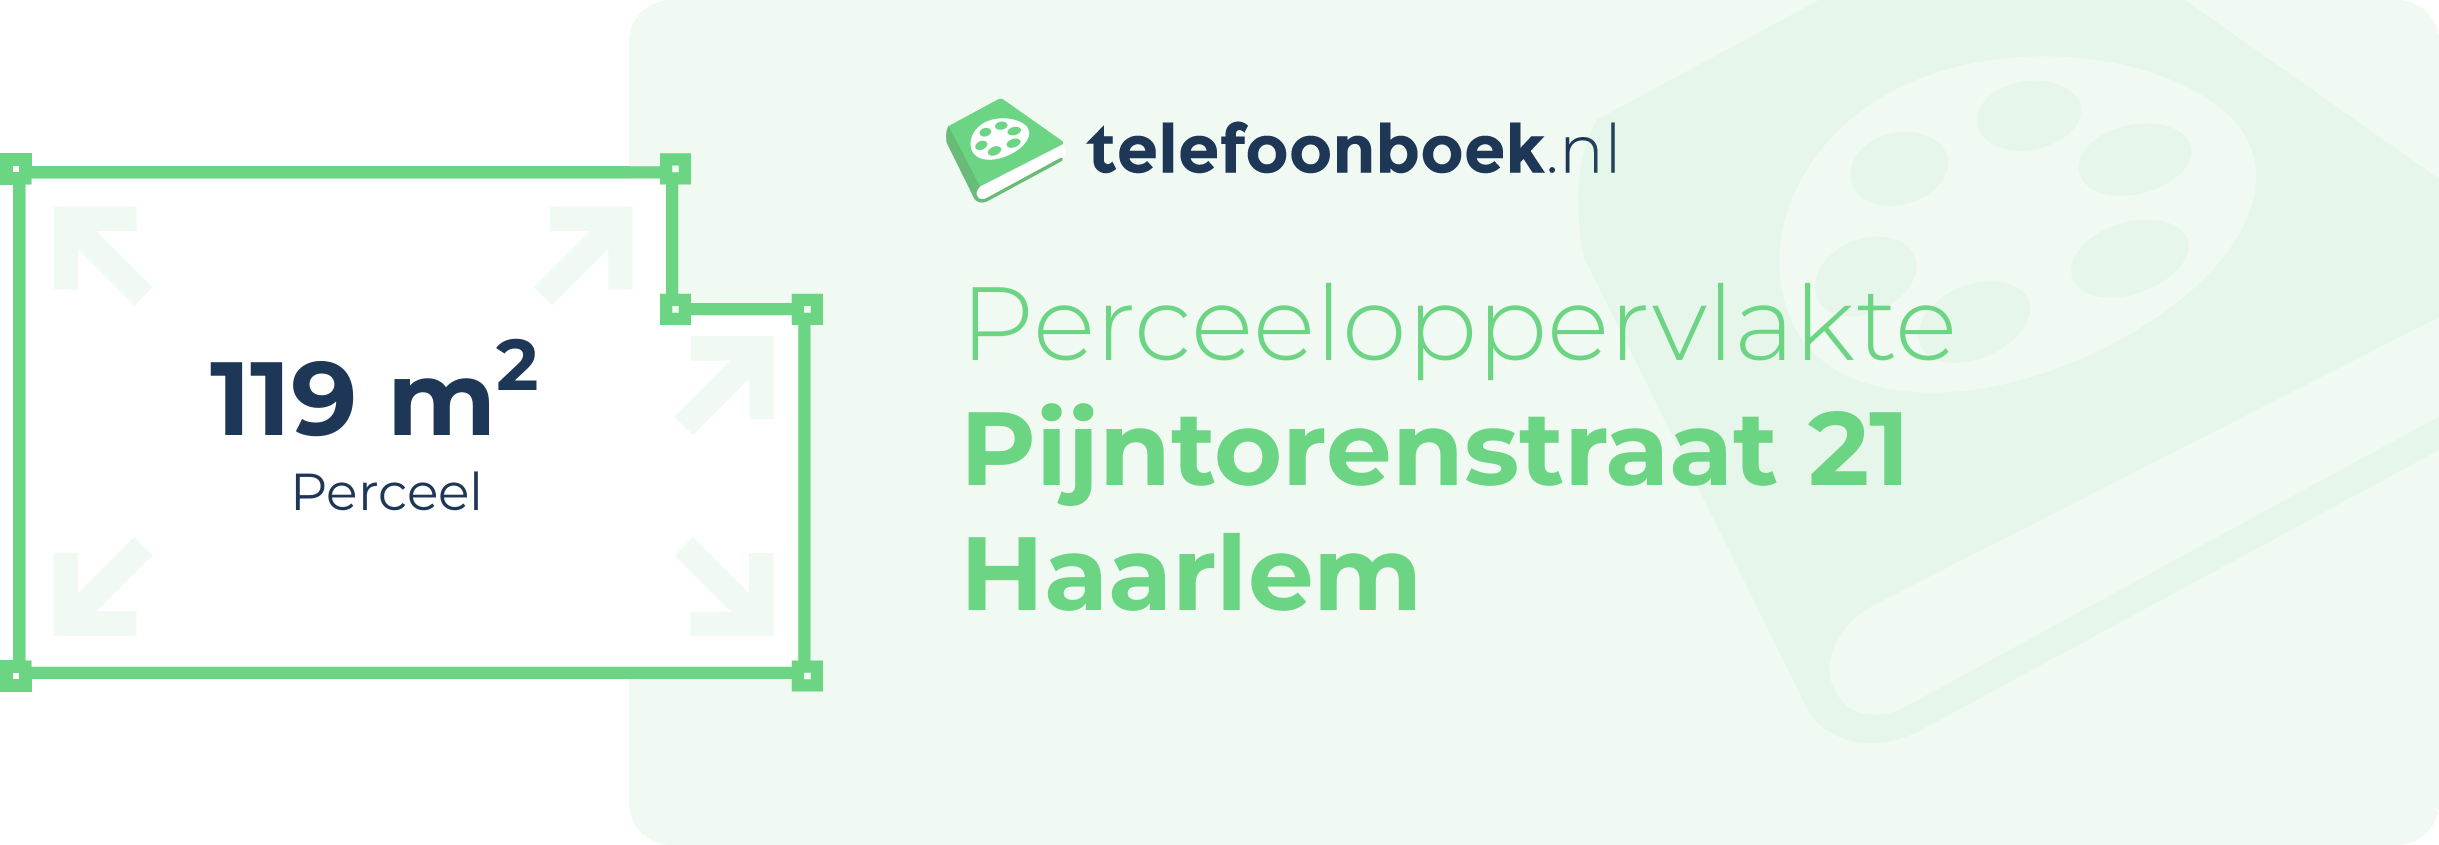 Perceeloppervlakte Pijntorenstraat 21 Haarlem